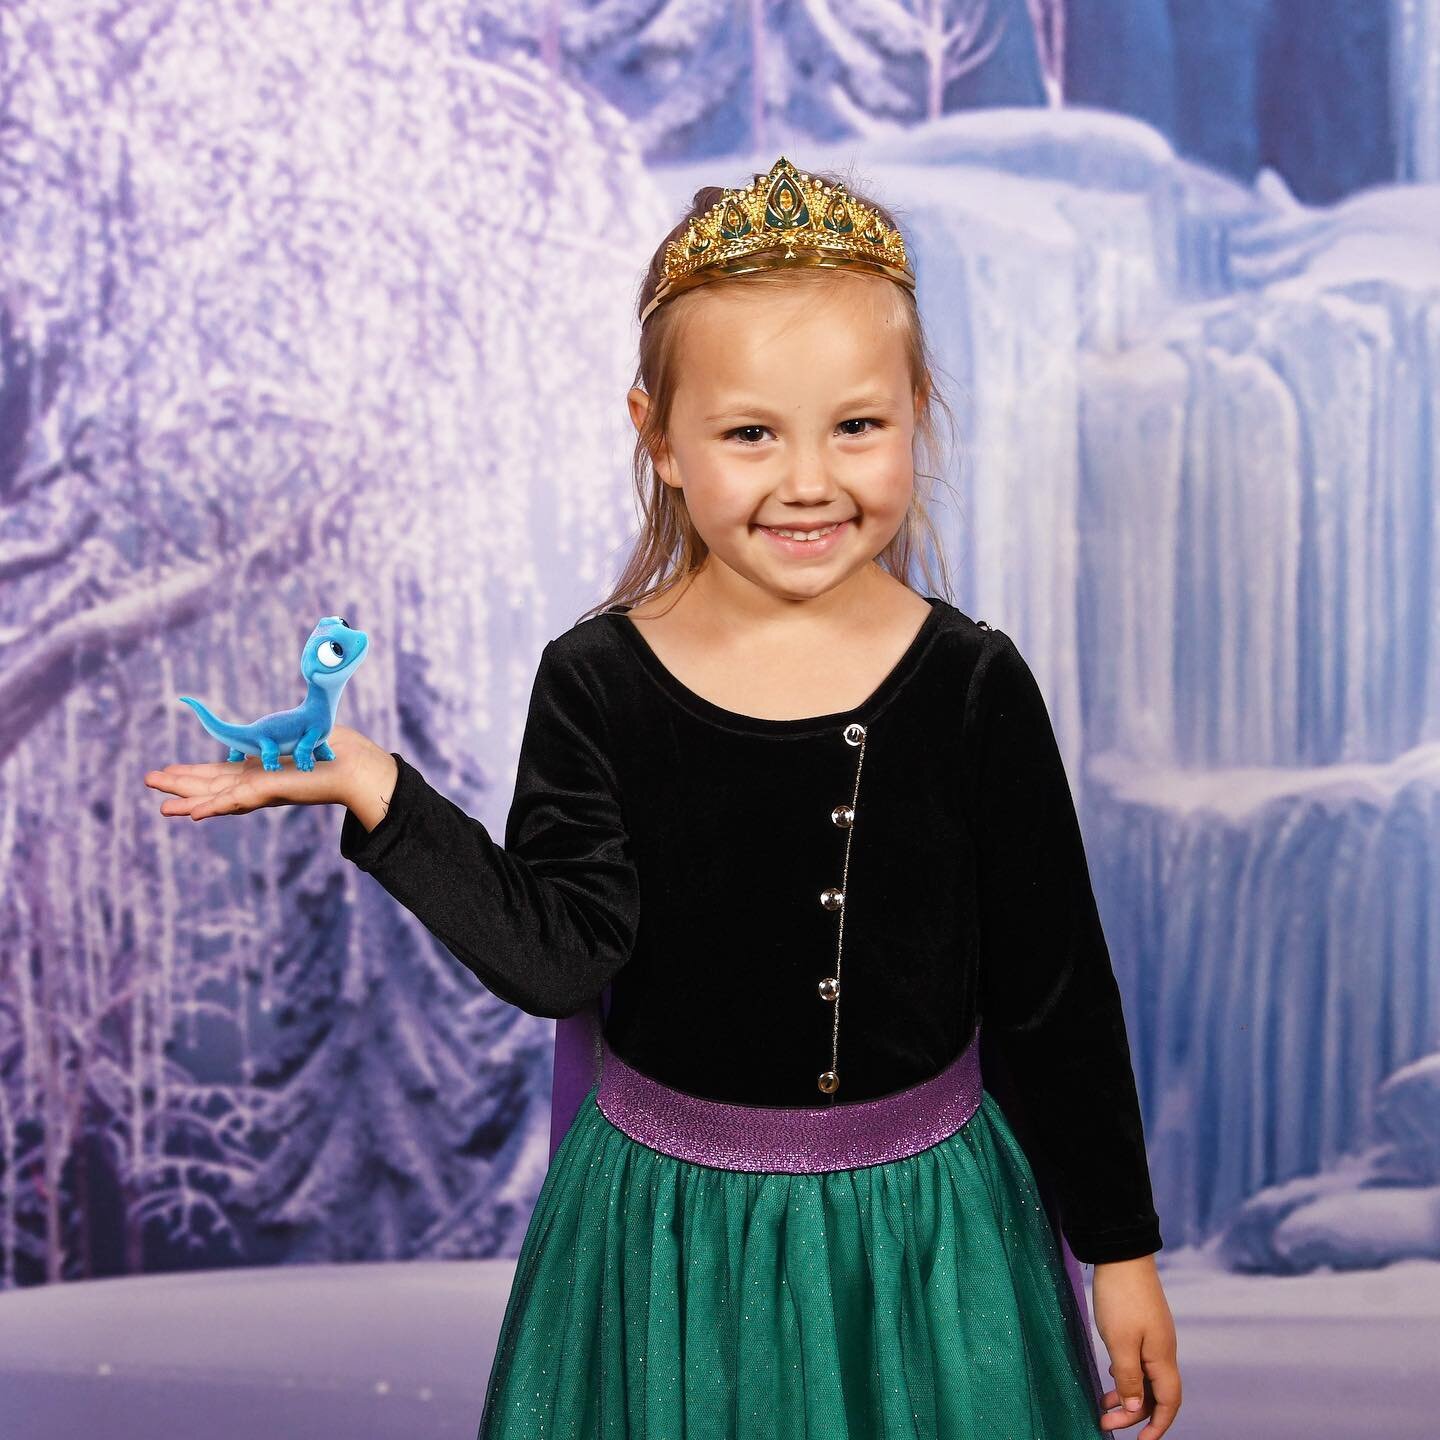 Magical frozen day to shine in your Princess-To-Queen dress 💜
#joycostumes
.
.
.
.
.
.
.
.
.
.
.
.
.
.
.
.
#frozen #frozen2 #disney #disneyprincess #disneyworld #disneygram #disneyparks #disneyphotography #disneymom #disneylove #annaofarendelle #wom